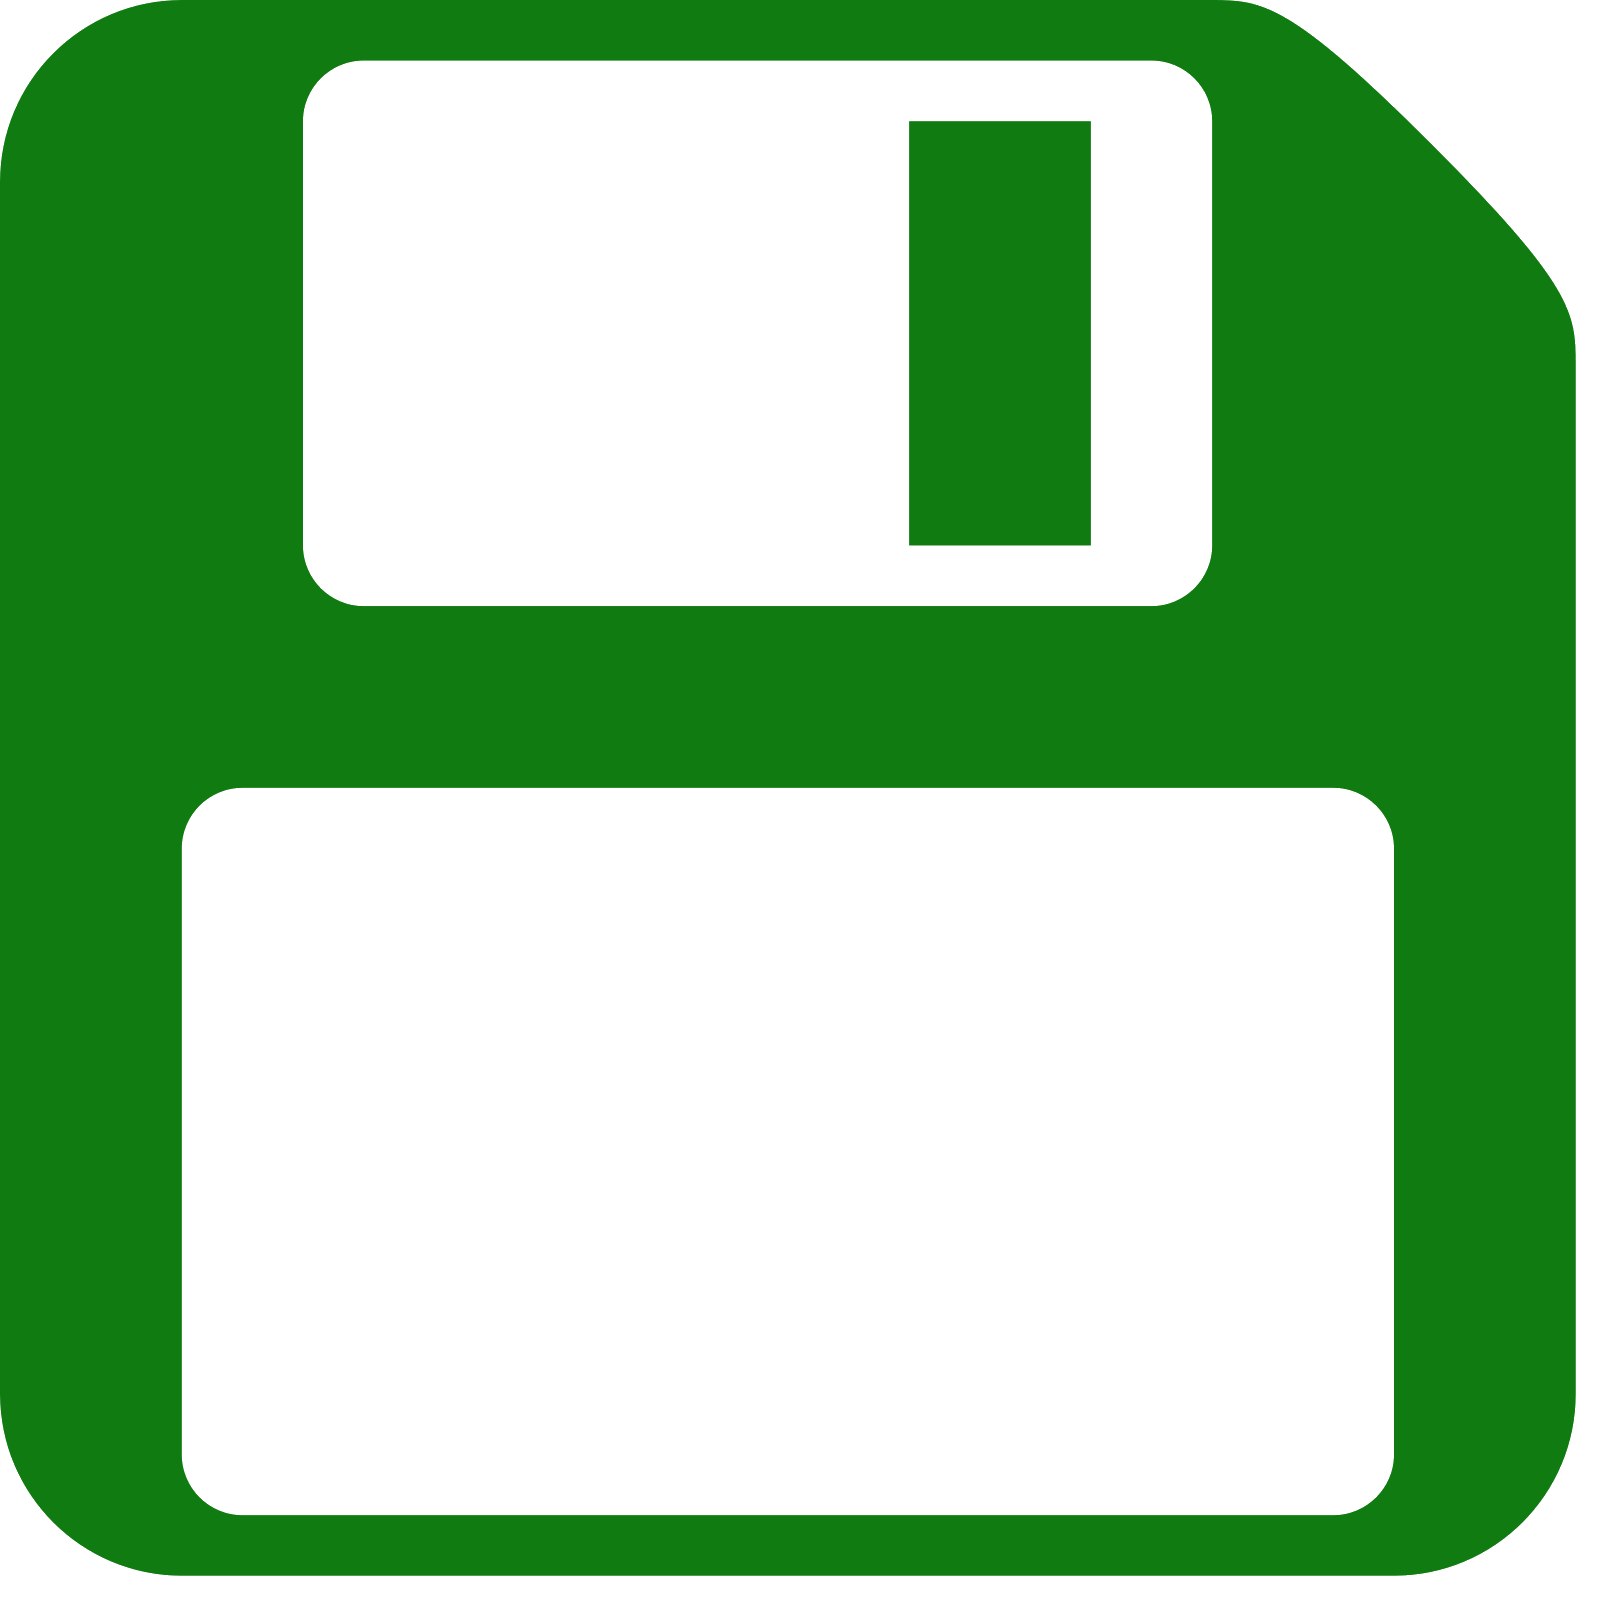 Floppy disk PNG